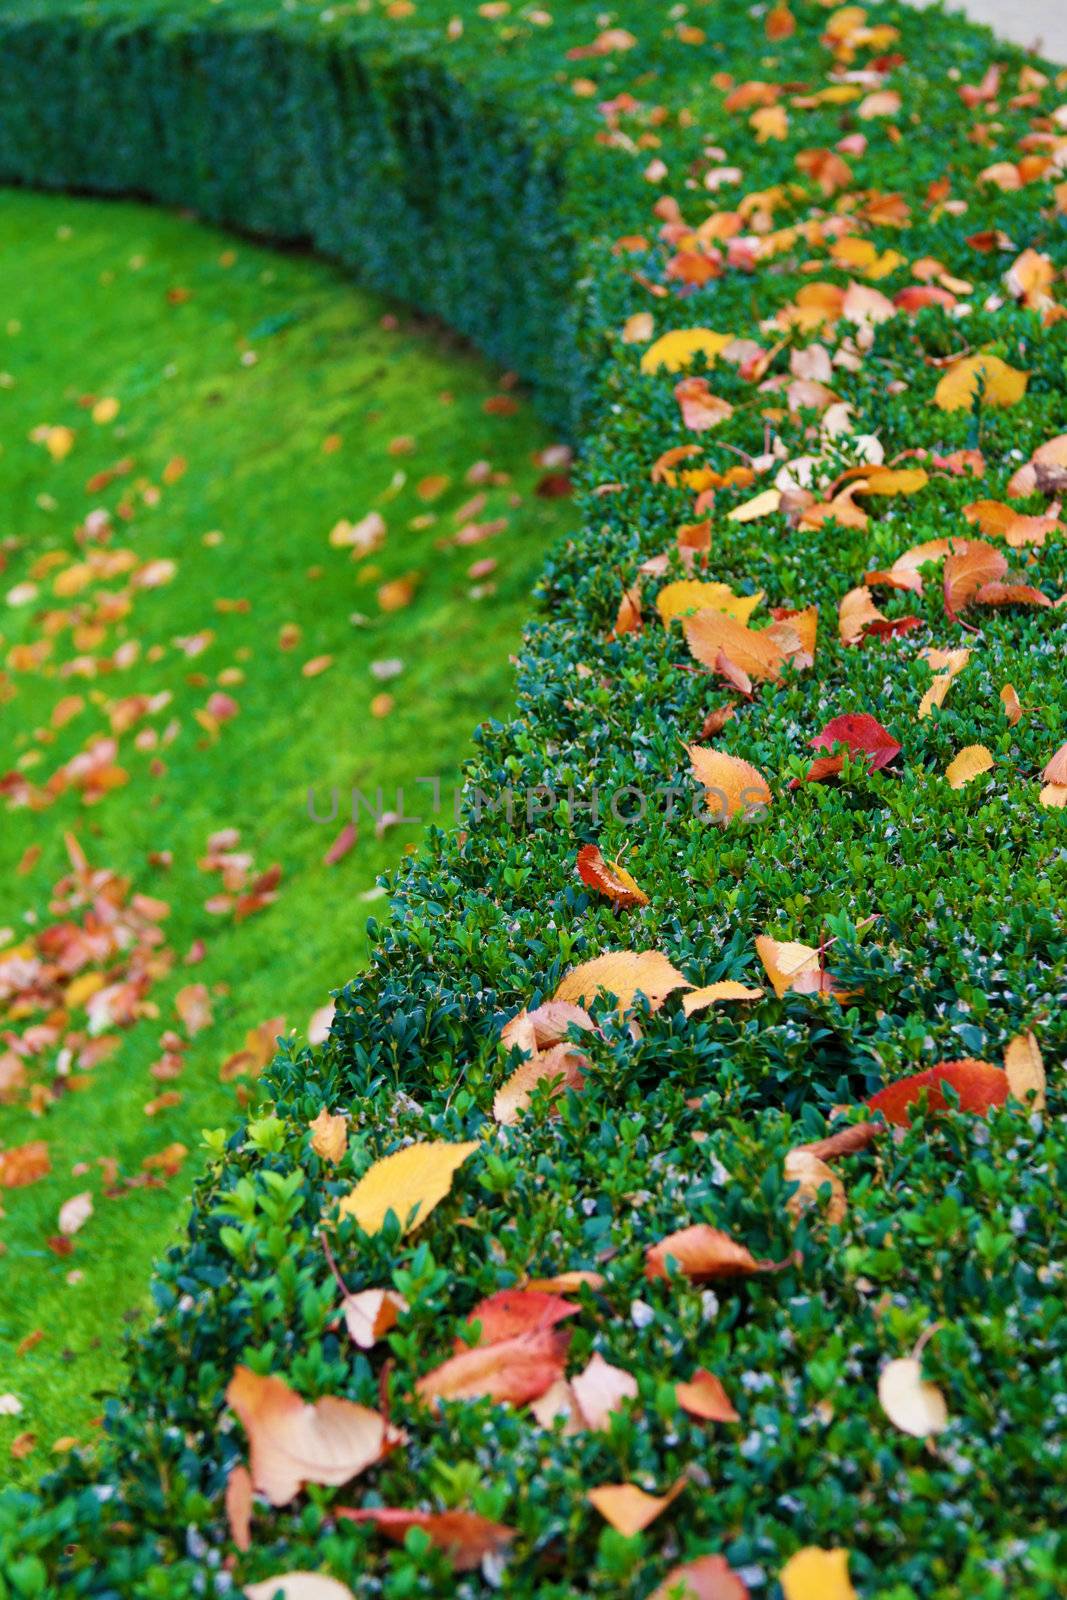 Boxwood bush with autumn leaves by Lamarinx